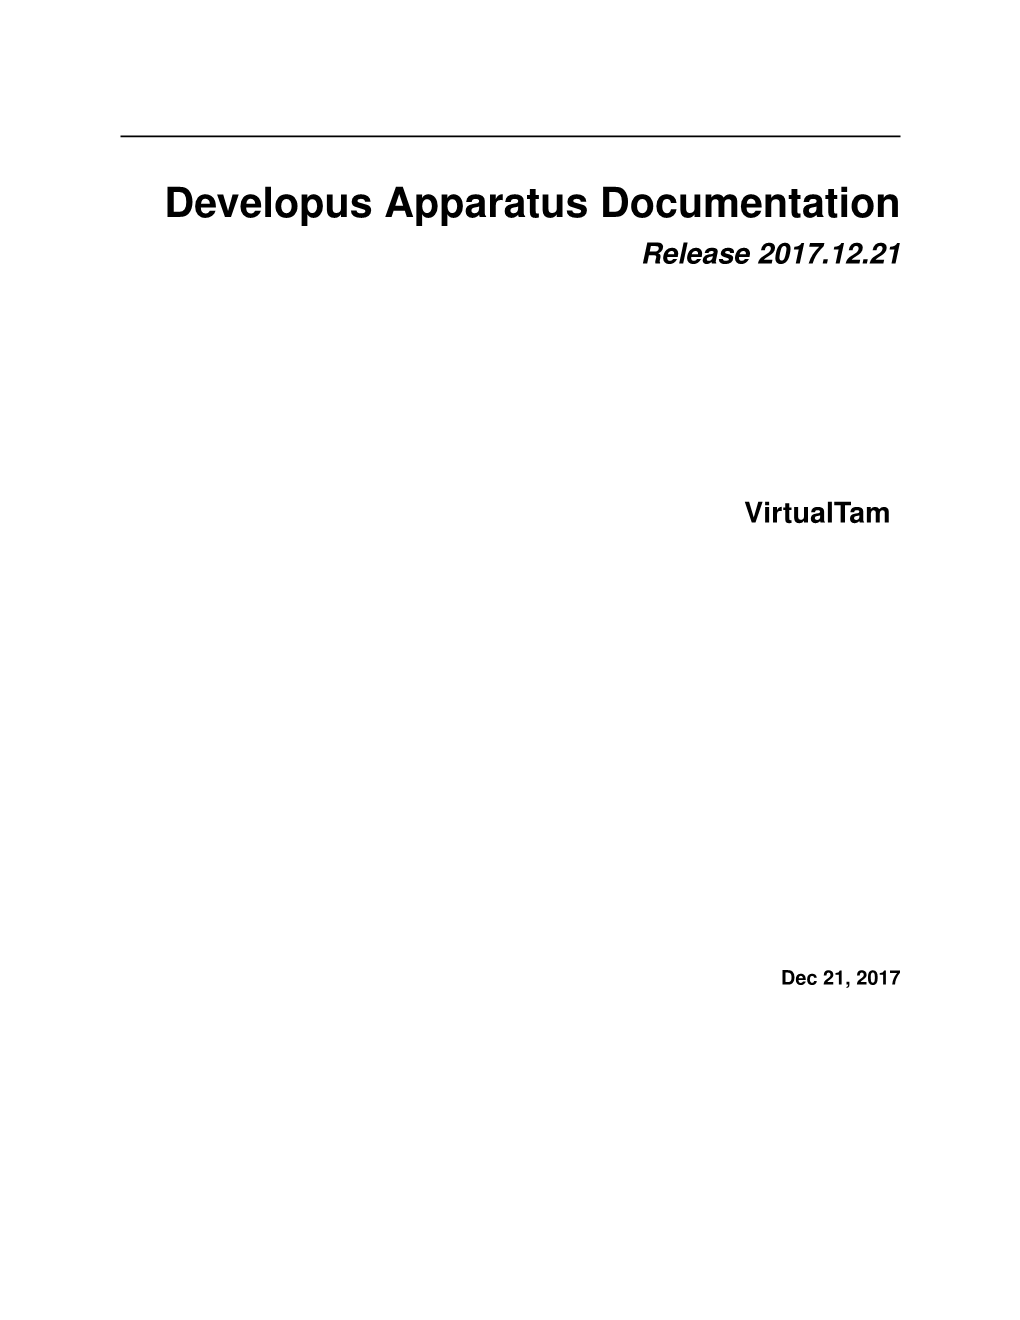 Developus Apparatus Documentation Release 2017.12.21